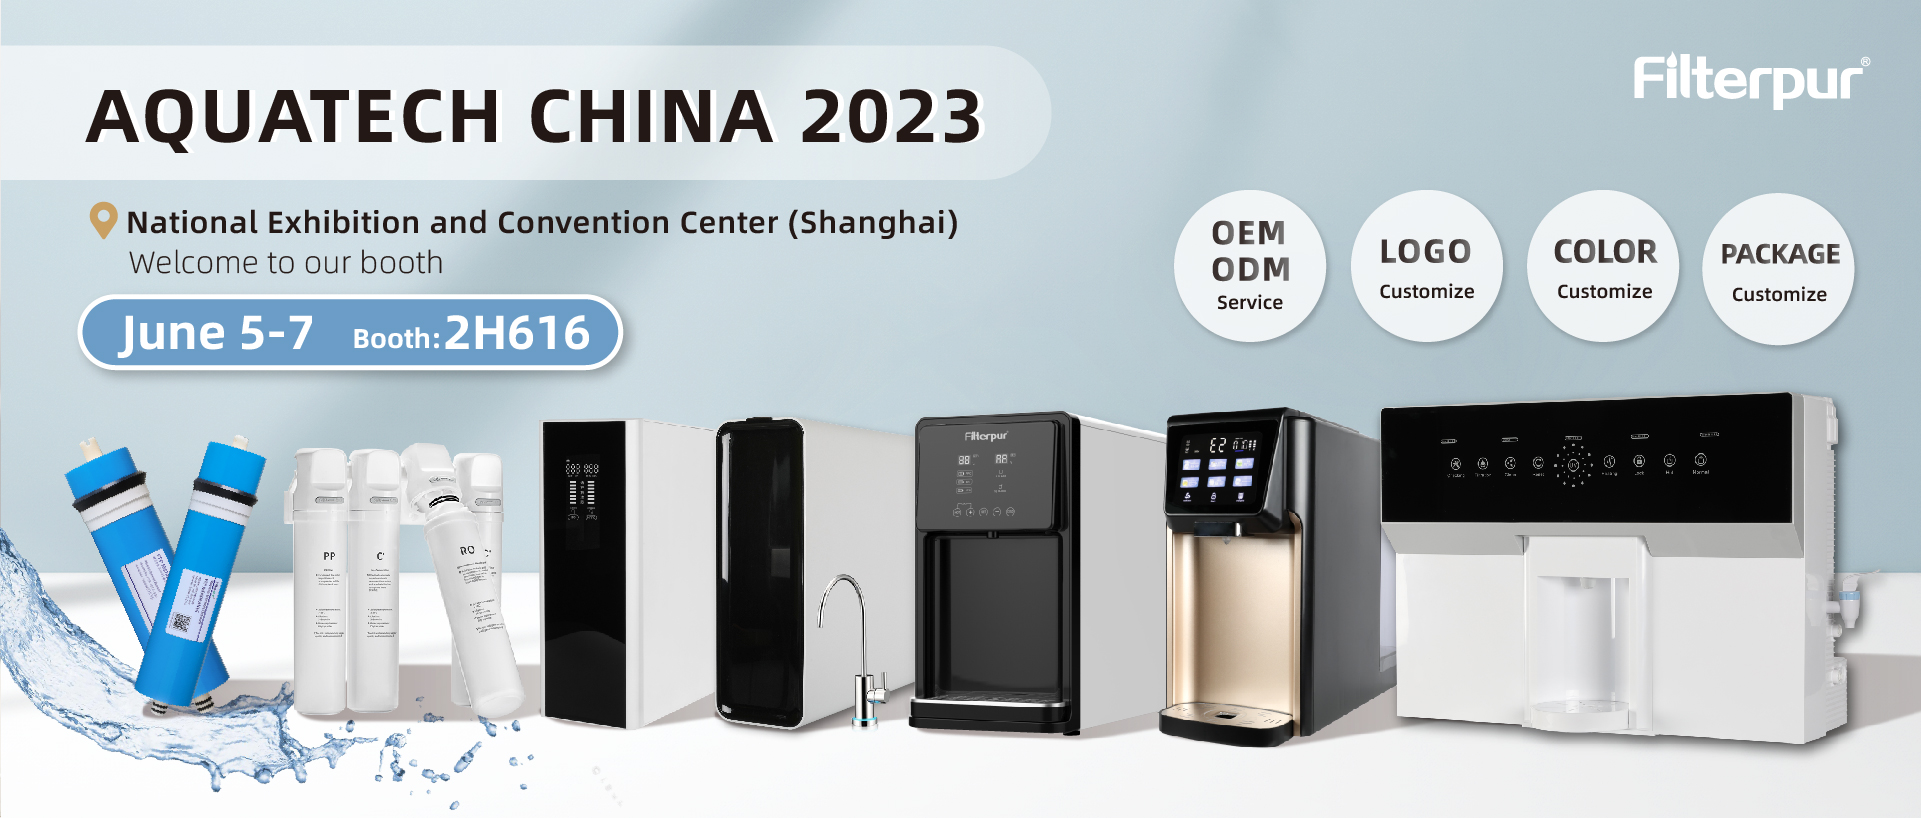 Tere tulemast meie messi Aquatech China 2023 messiboksi